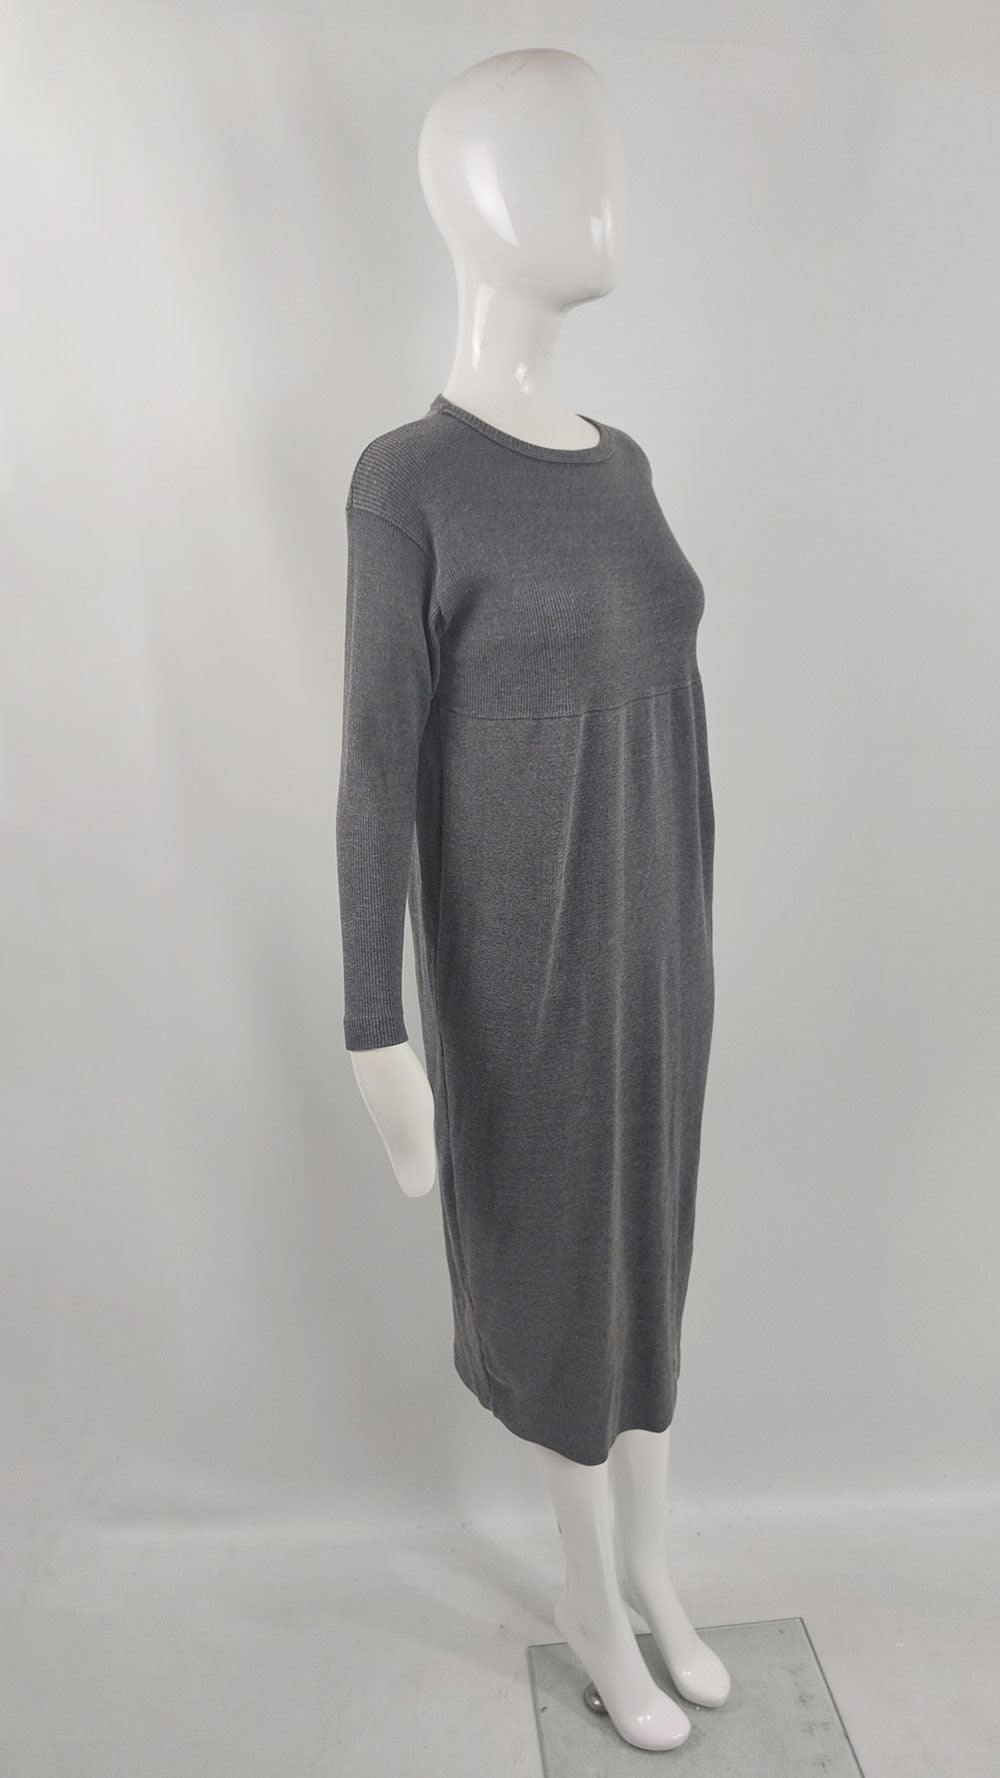 Joseph Tricot Vintage Grey Ribbed Knit Long Sleeve Dress